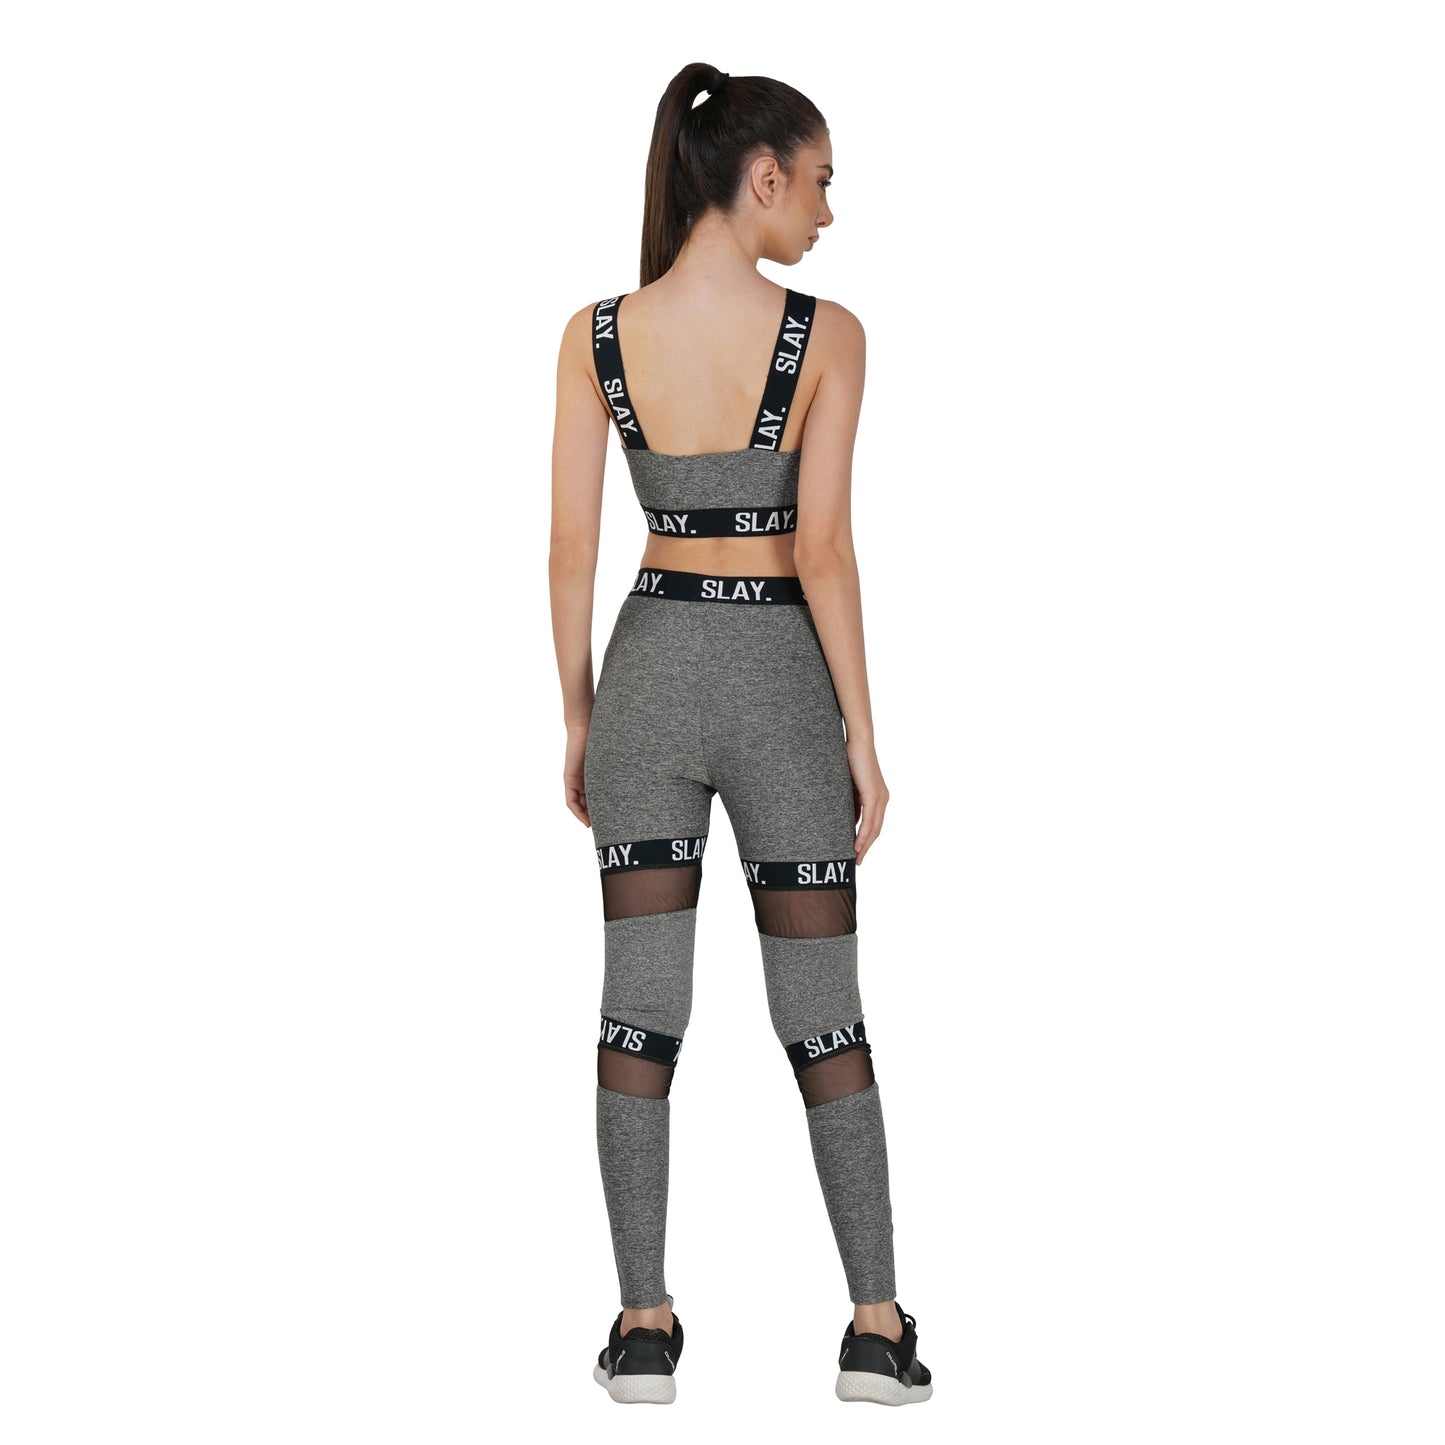 SLAY. Sport Women's Activewear Full Sleeves Crop Top And Pants Co-ord Set Grey